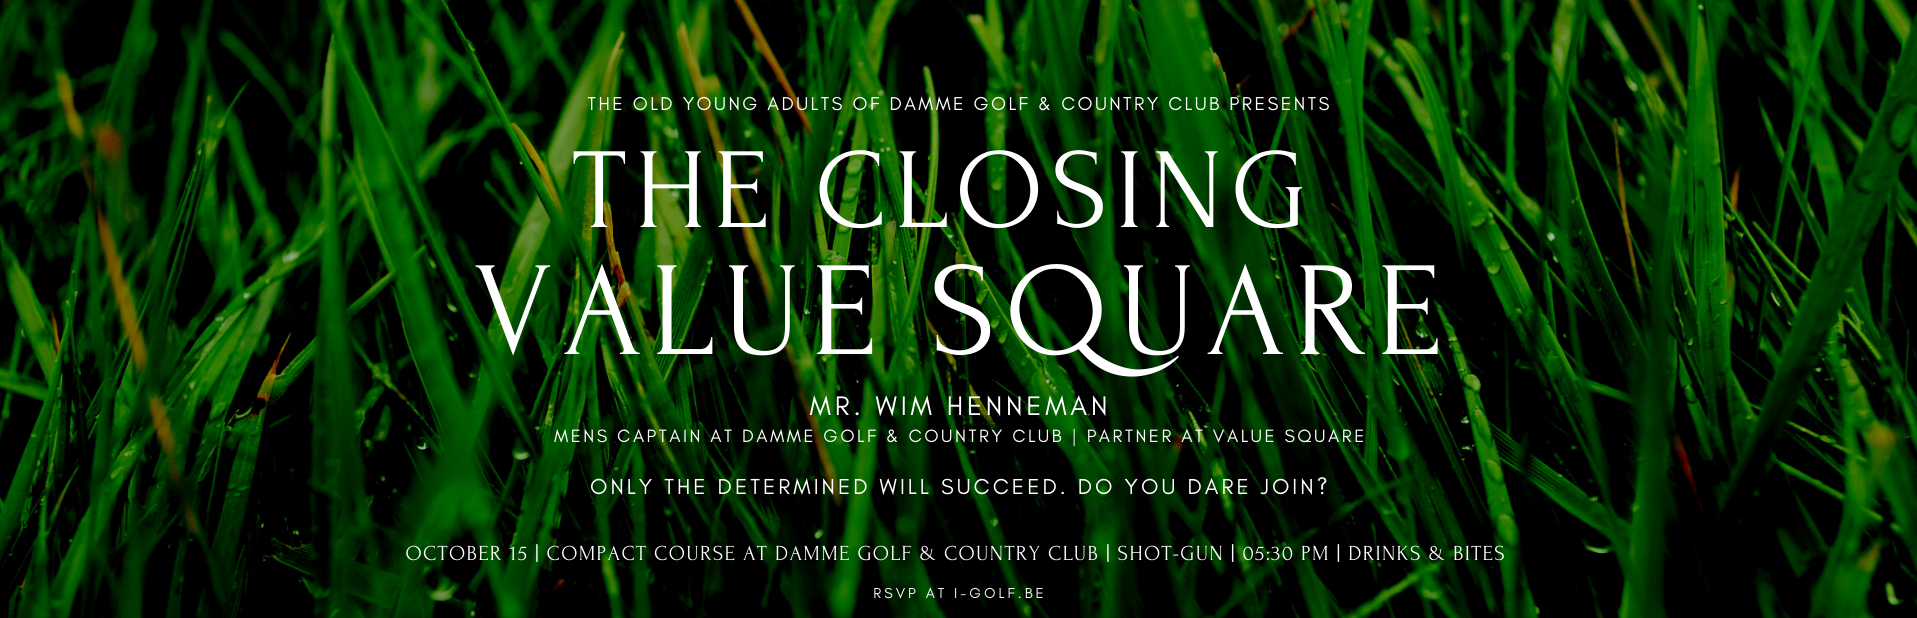 2021.10.15 The Closing Compact Course – Wim Henneman van Value Square